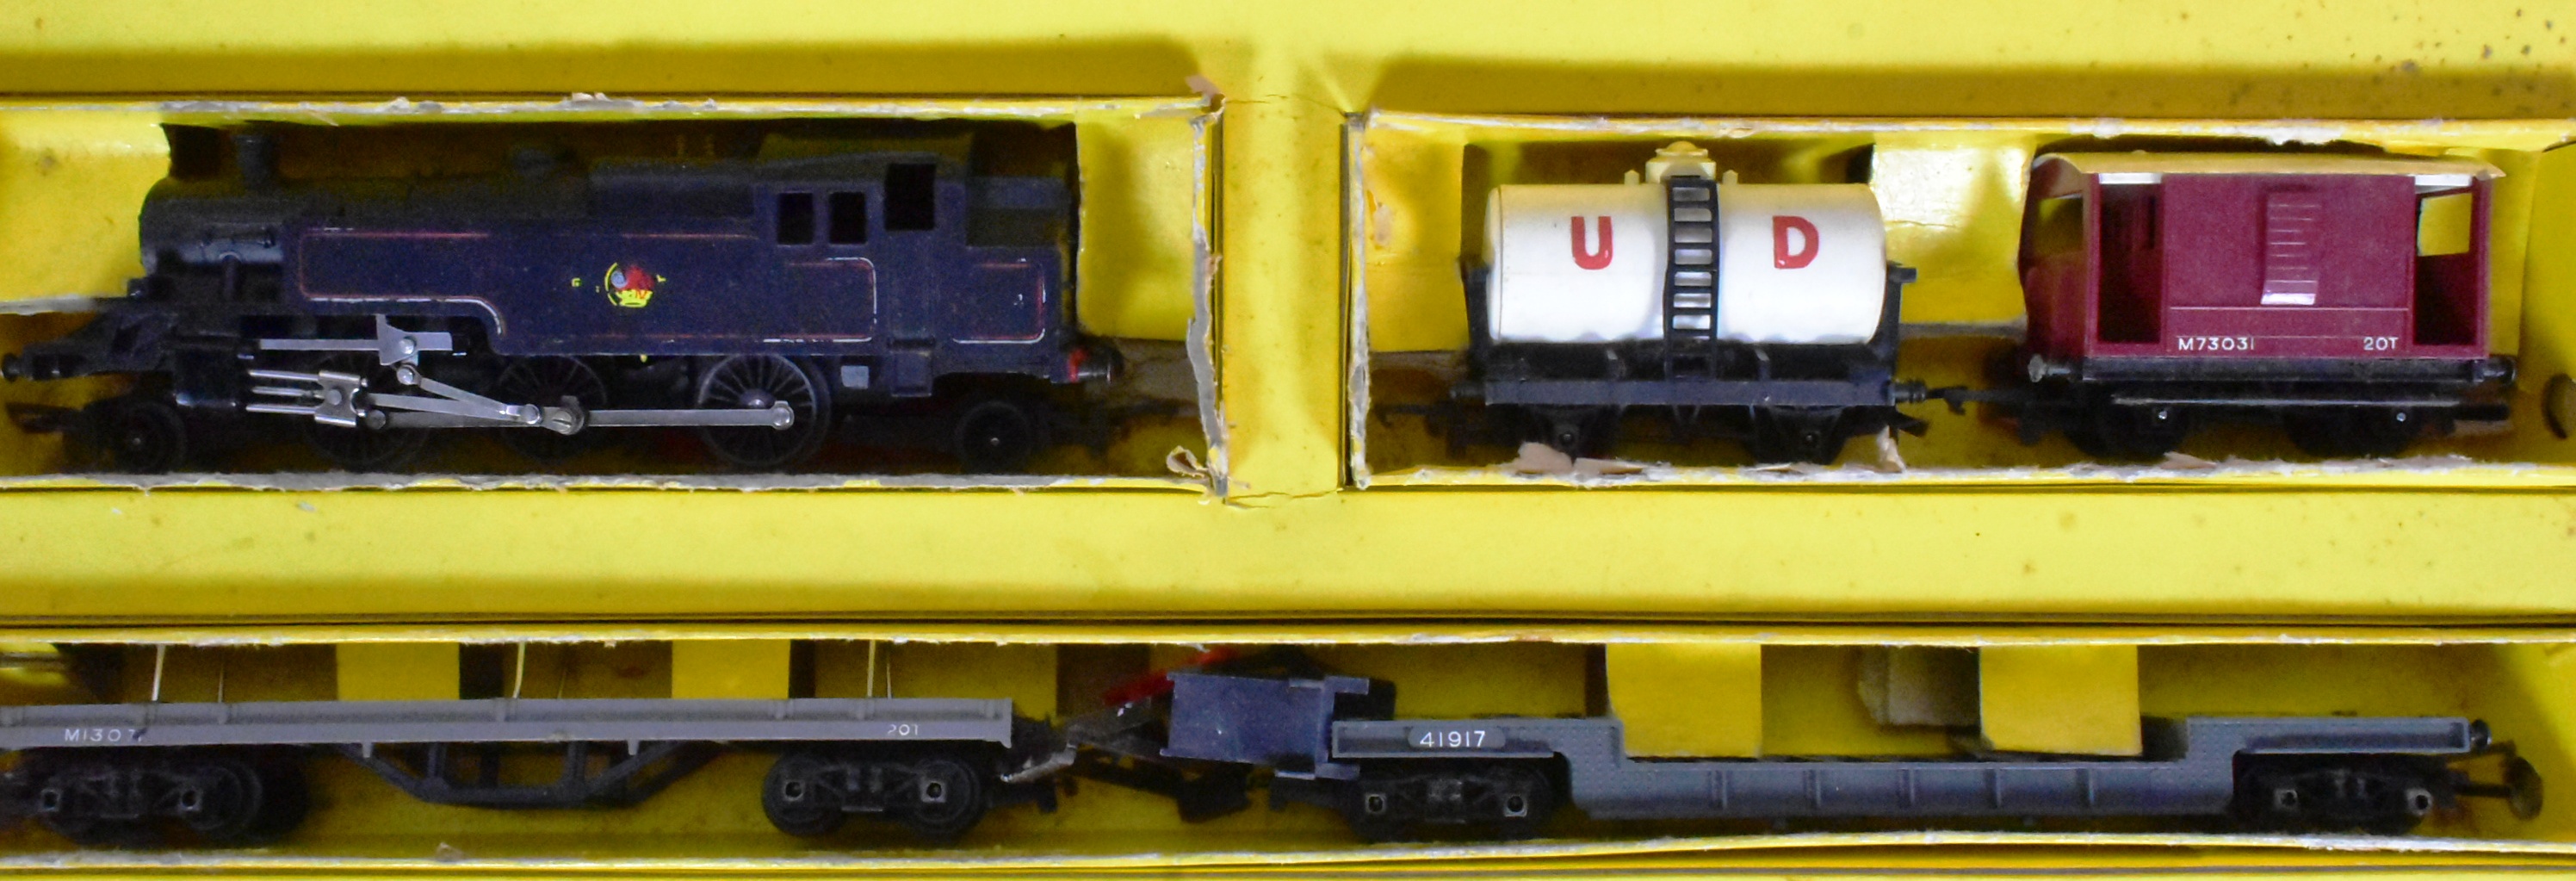 MODEL RAILWAY - COLLECTION OF TRIANG OO GAUGE - Image 3 of 7